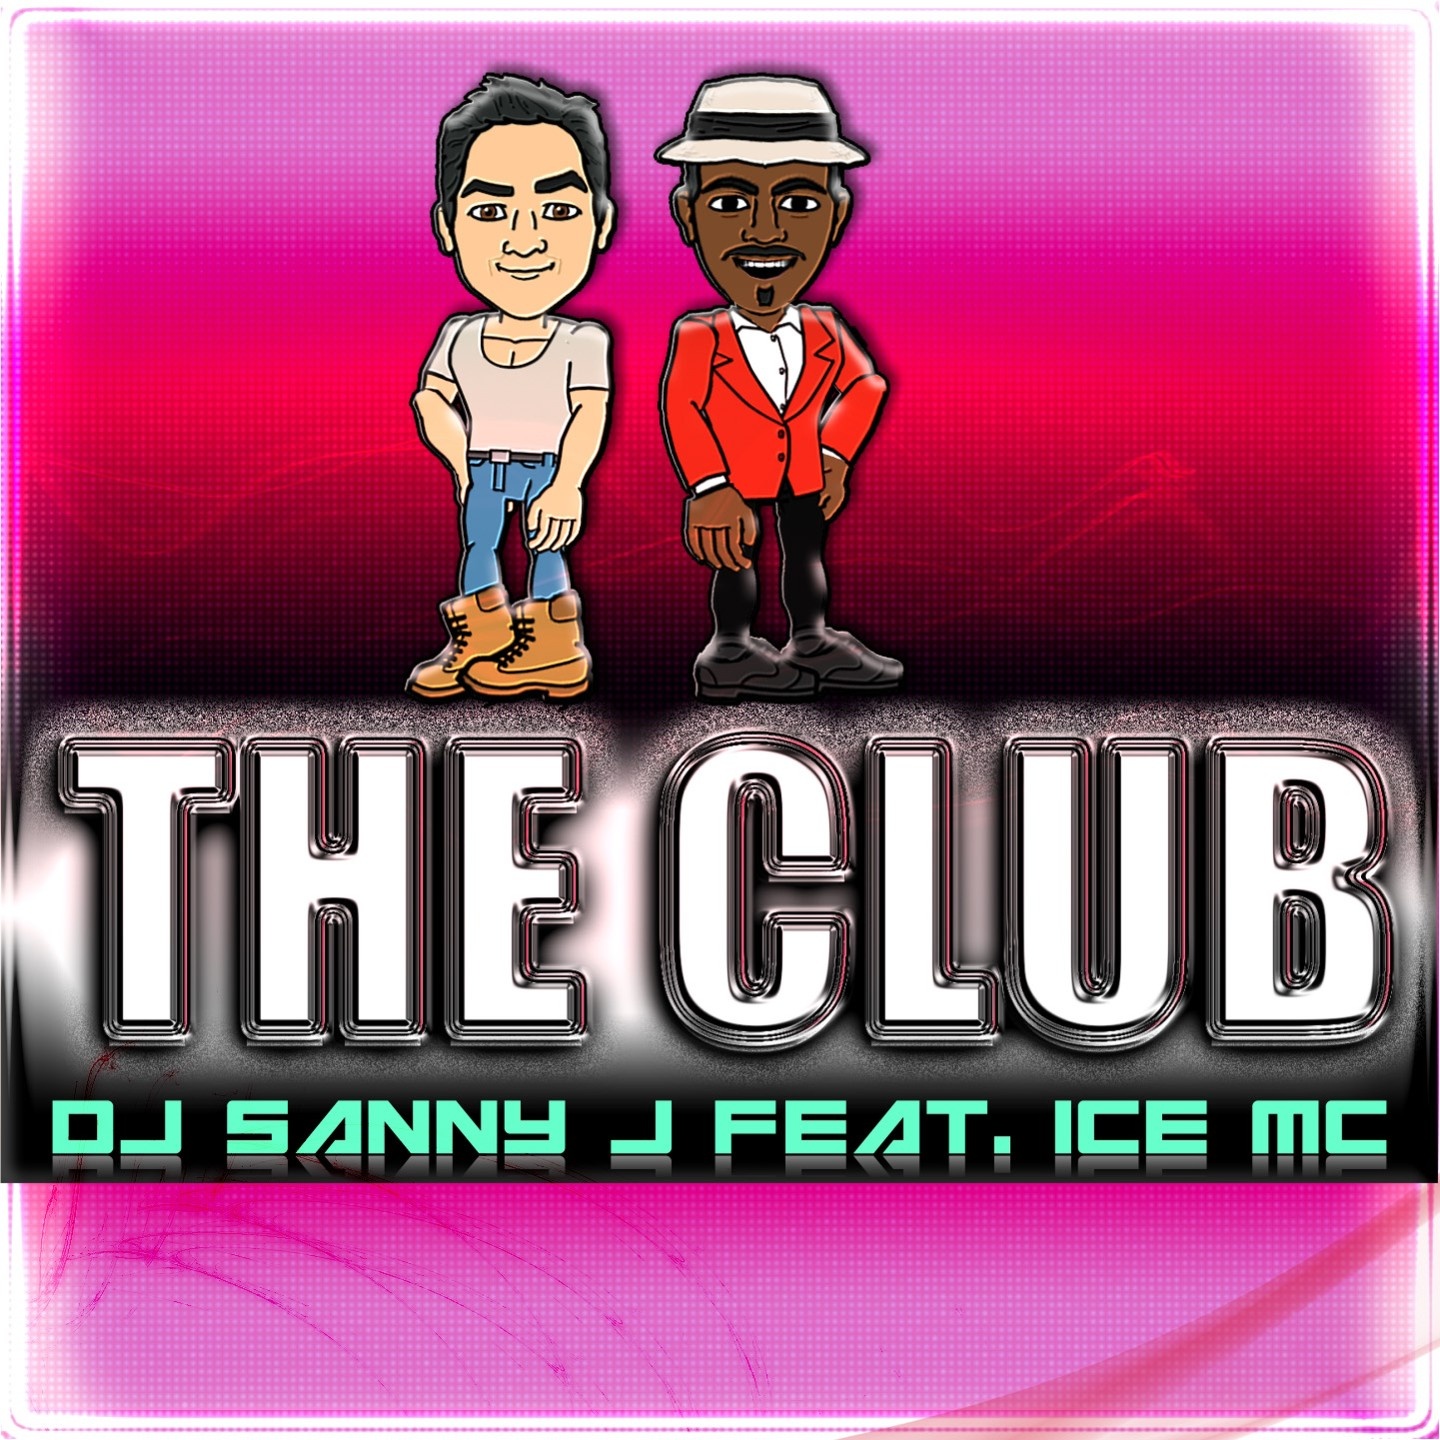 The Club (Stephan F Remix)